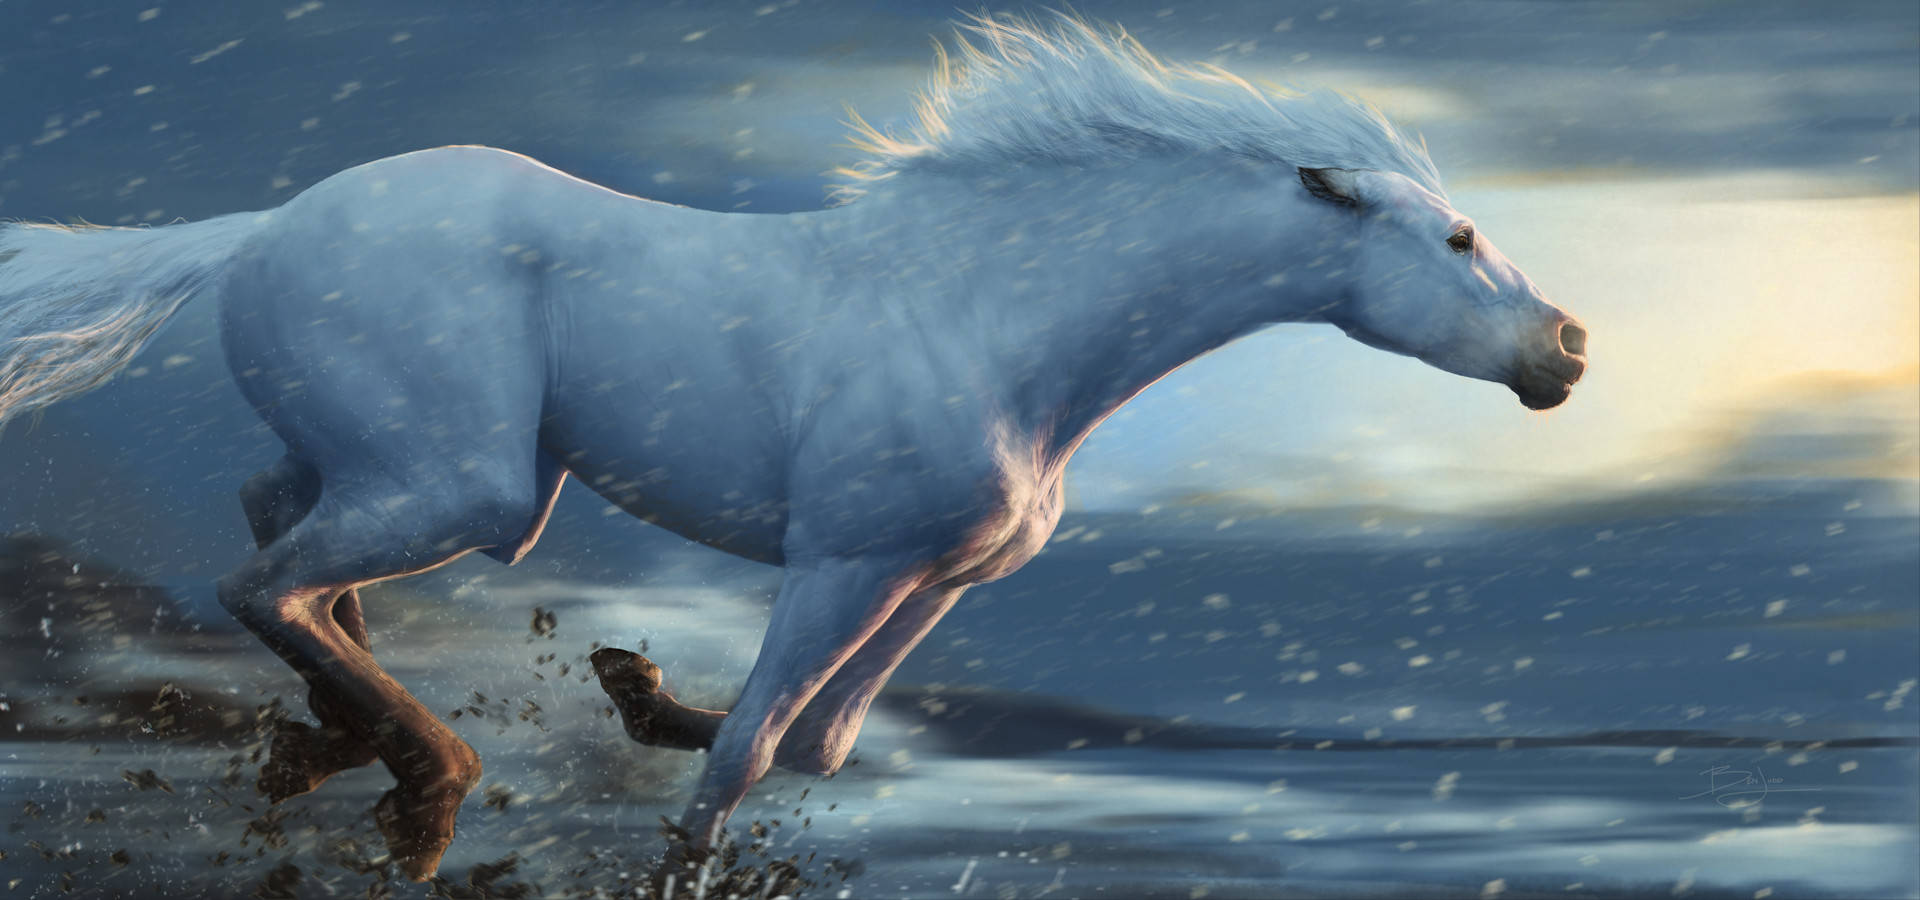 Majestic White Running Horse Background